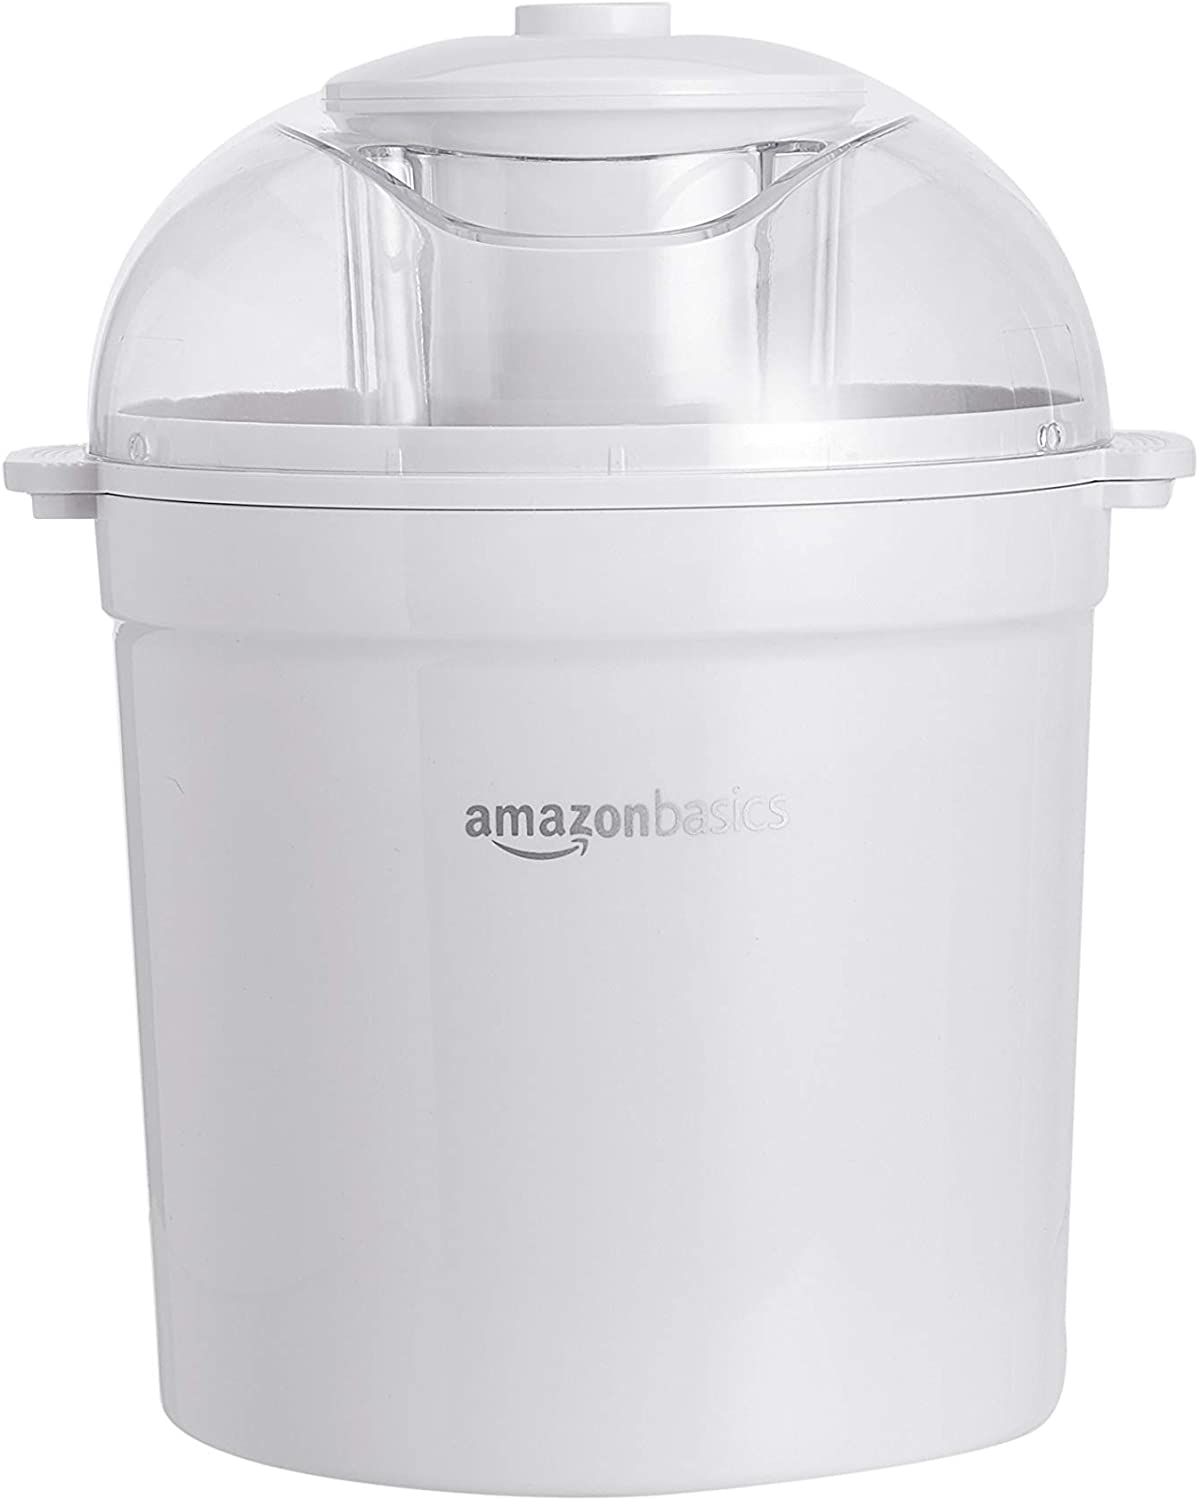 Amazon Basics 1.5 Quart Automatic Homemade Ice Cream Maker Import To Shop ×Product customization General Description Gallery